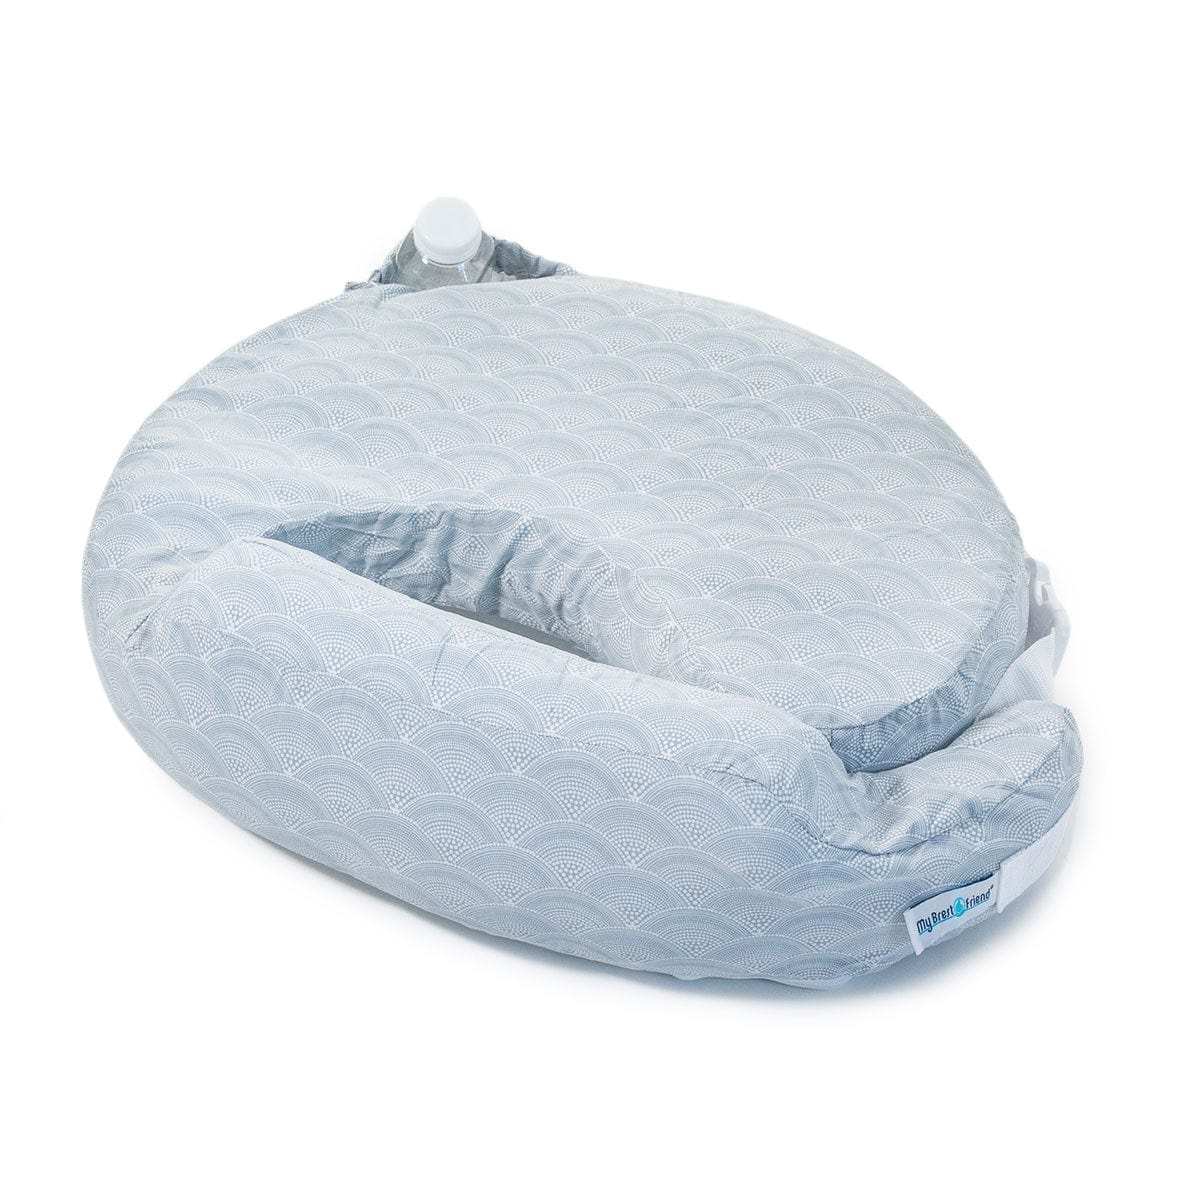 Inflatable Travel Nursing Pillow